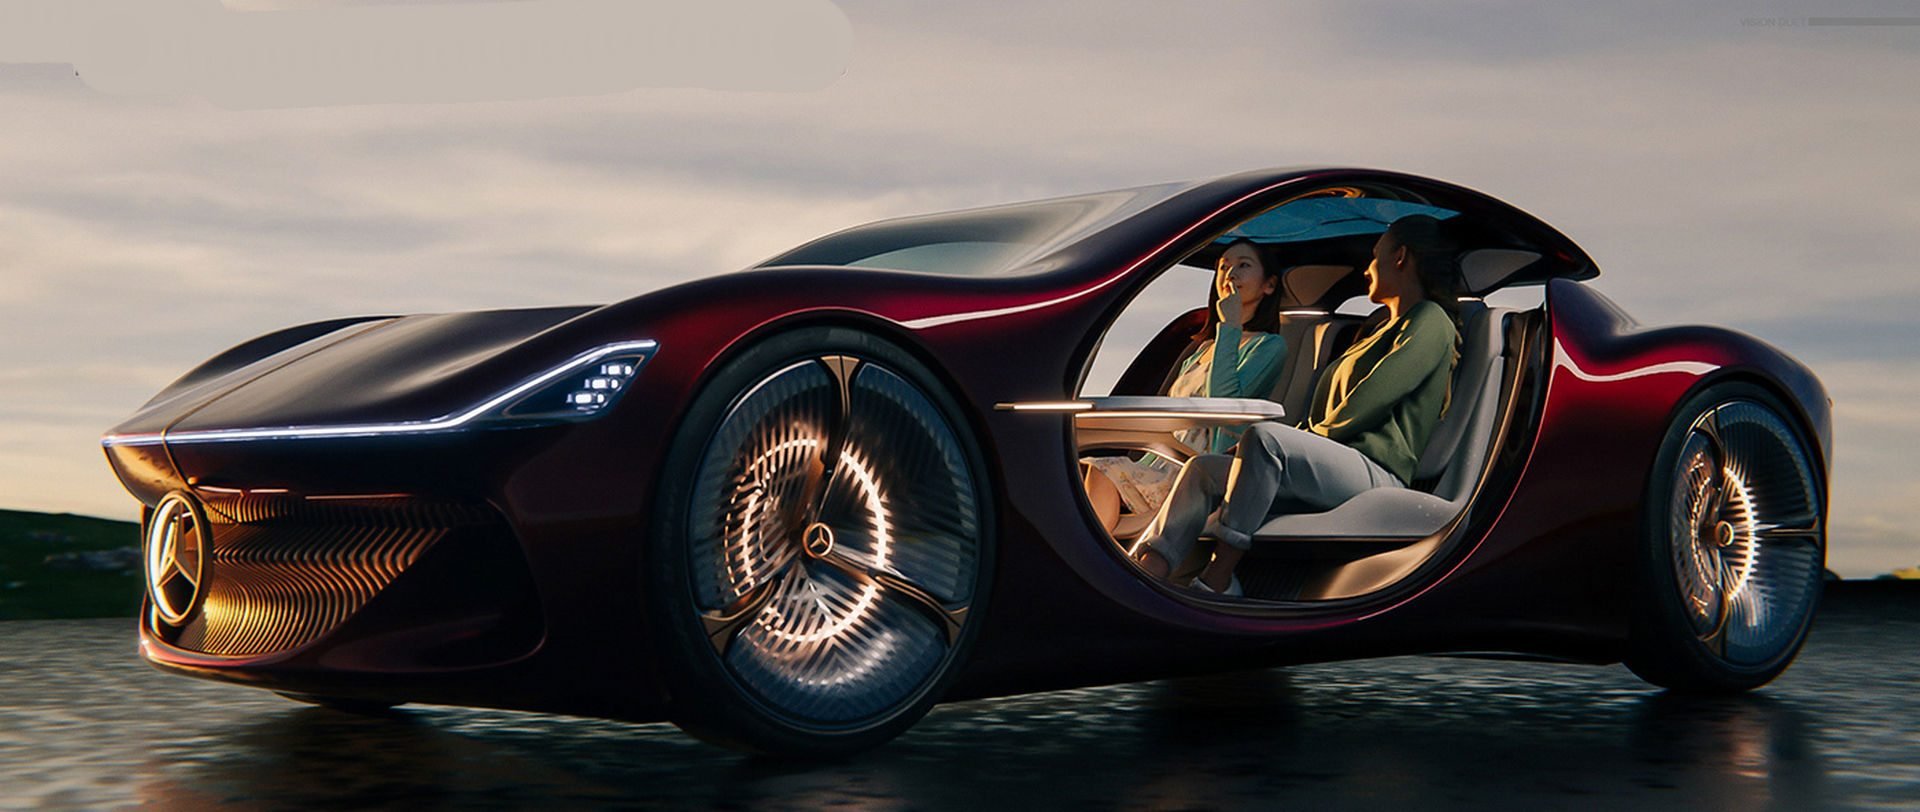 Begini Tampilan Mobil Futuristik Mercedes-Benz Karya Mahasiswa California